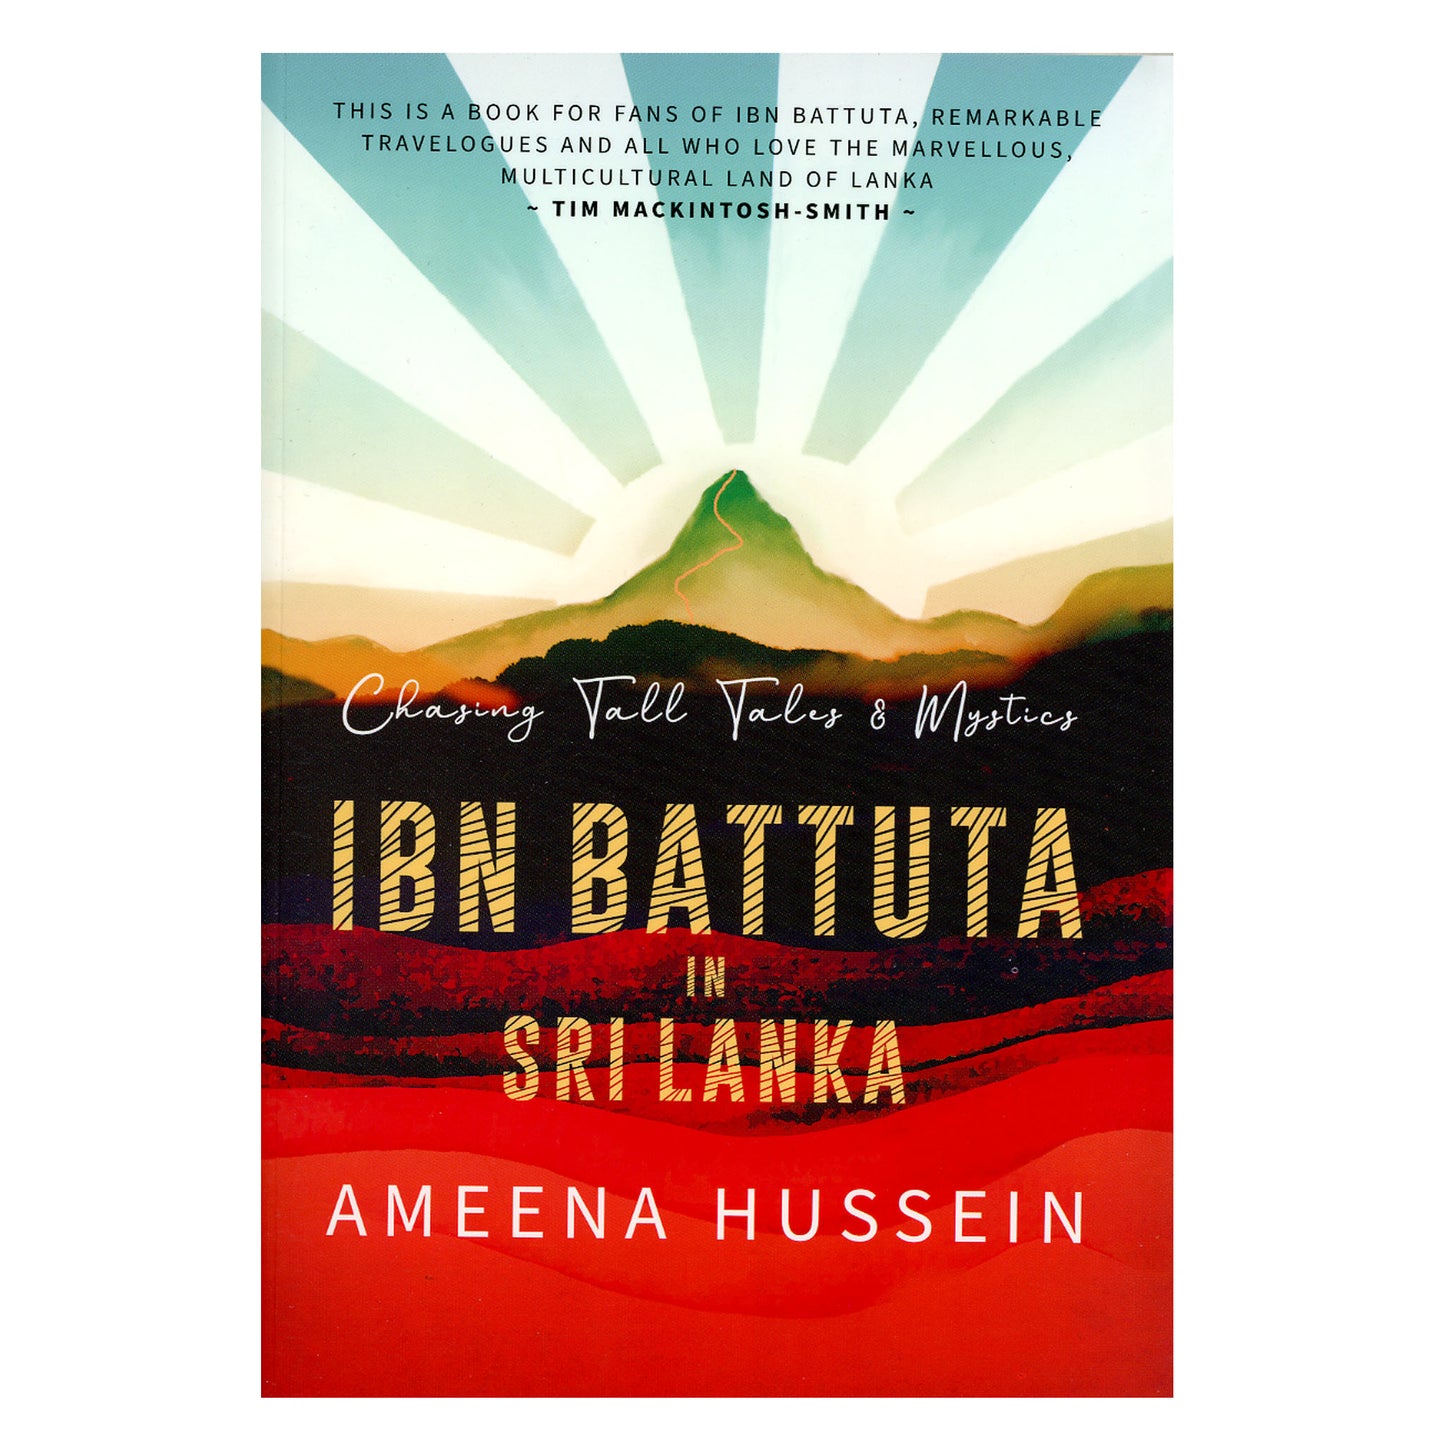 Chasing Tall Tales and Mystics: Ibn Battuta in Sri Lanka by Ameena Hussein (Shortlisted for the Gratiaen Prize)